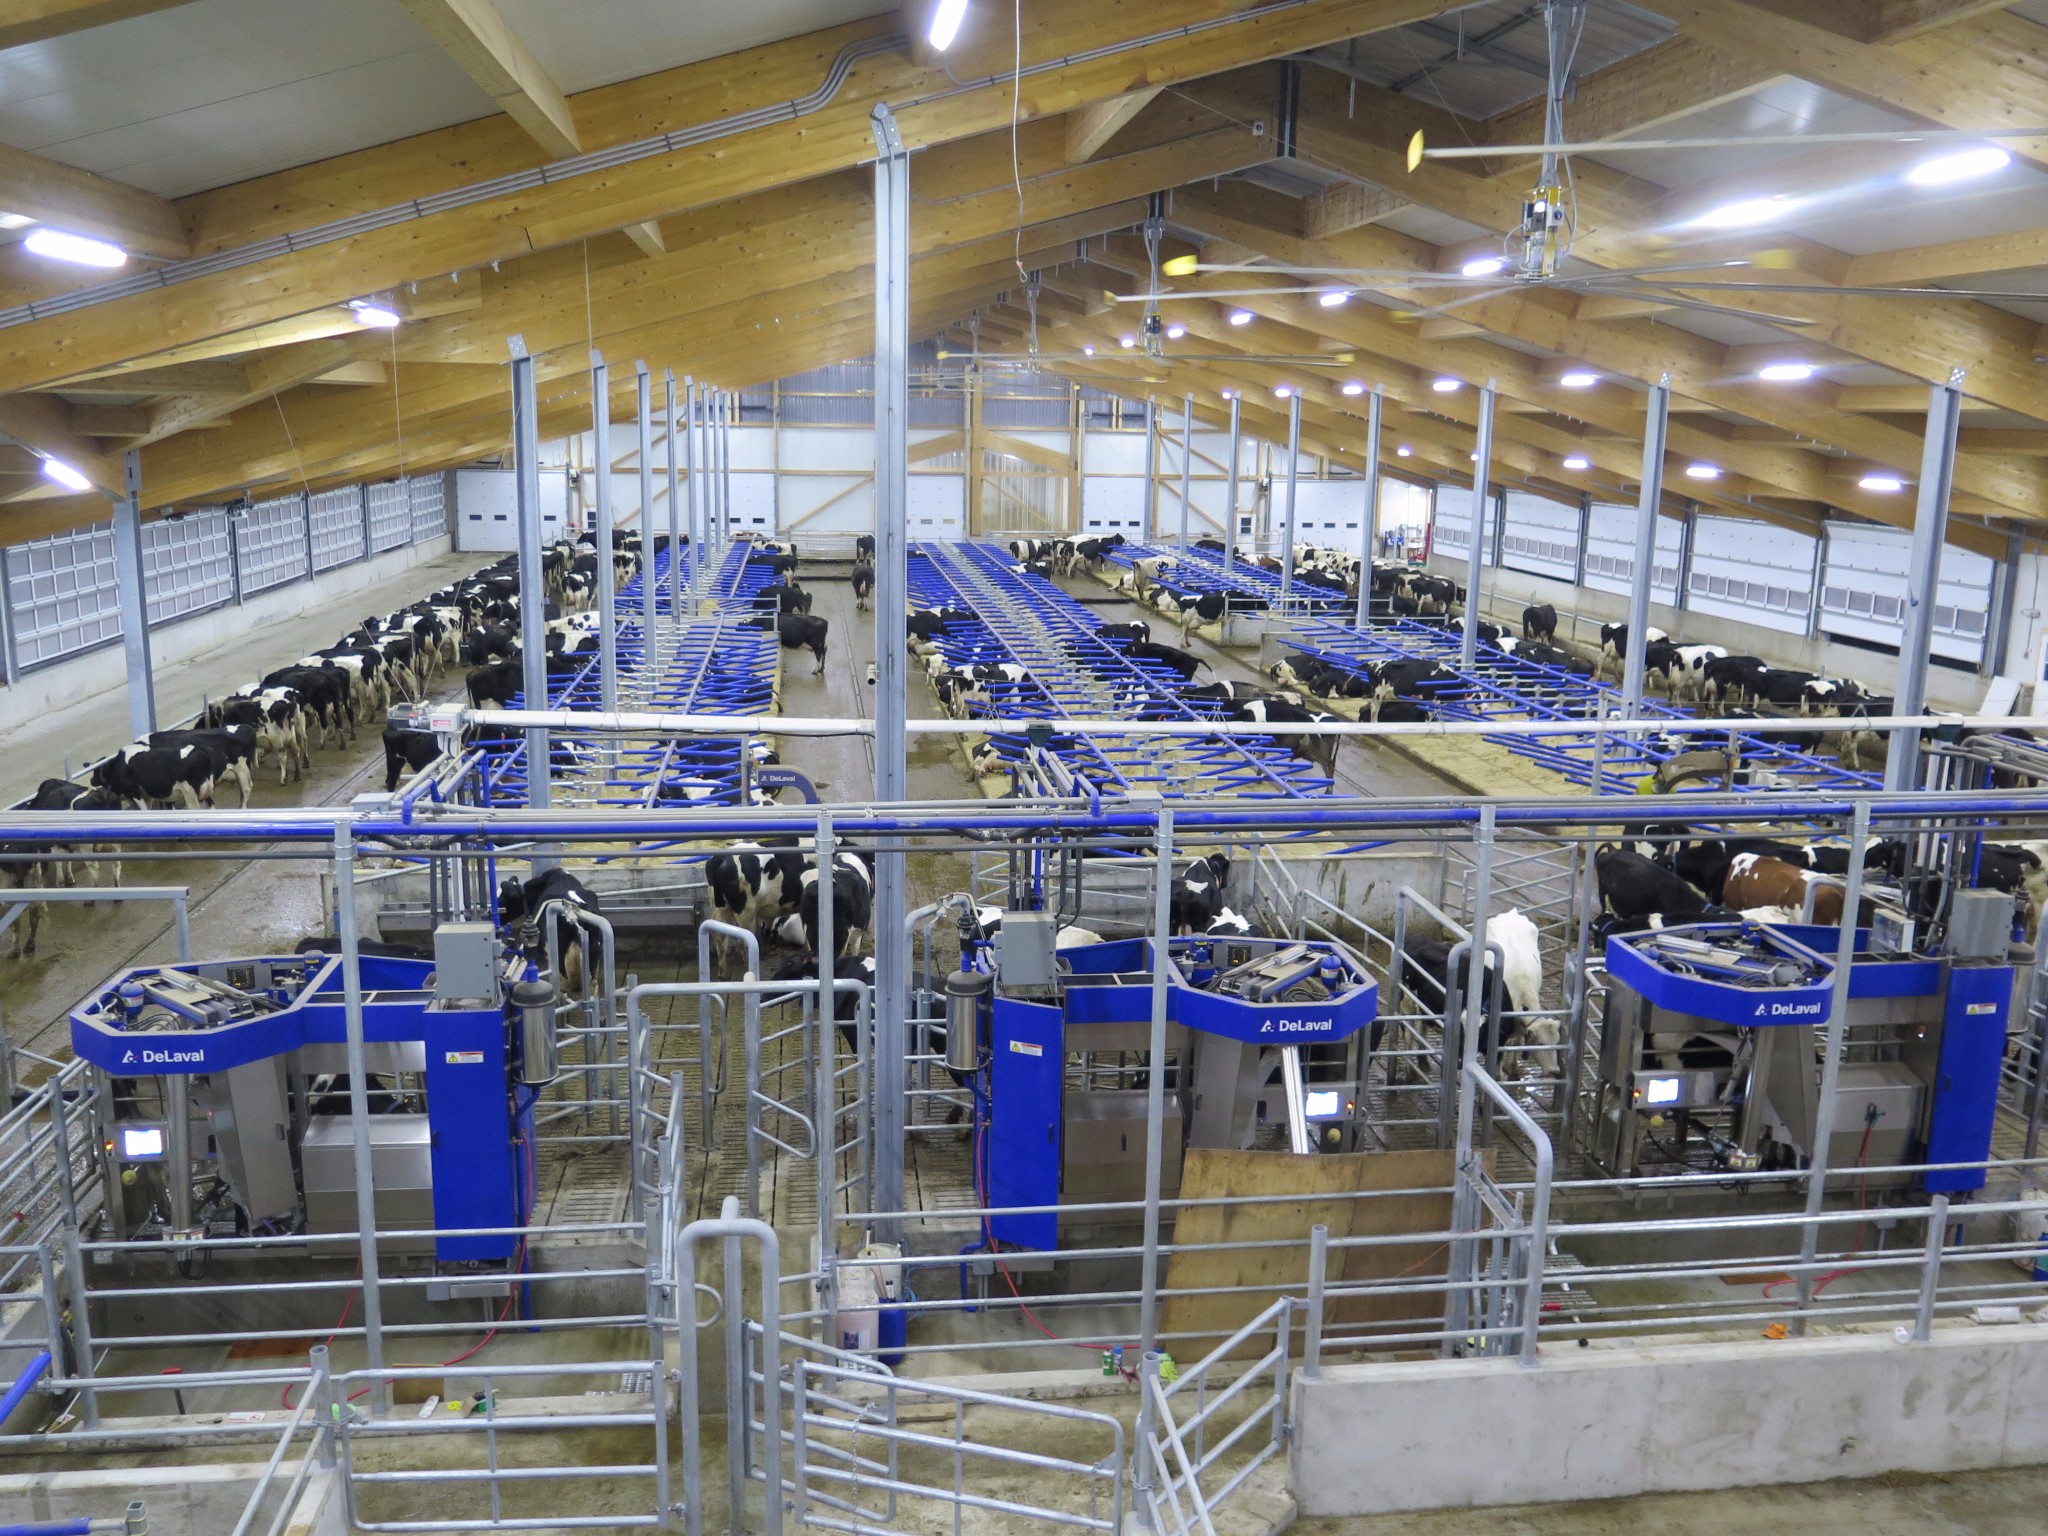 2016 Manitoba - Robot dairy barn